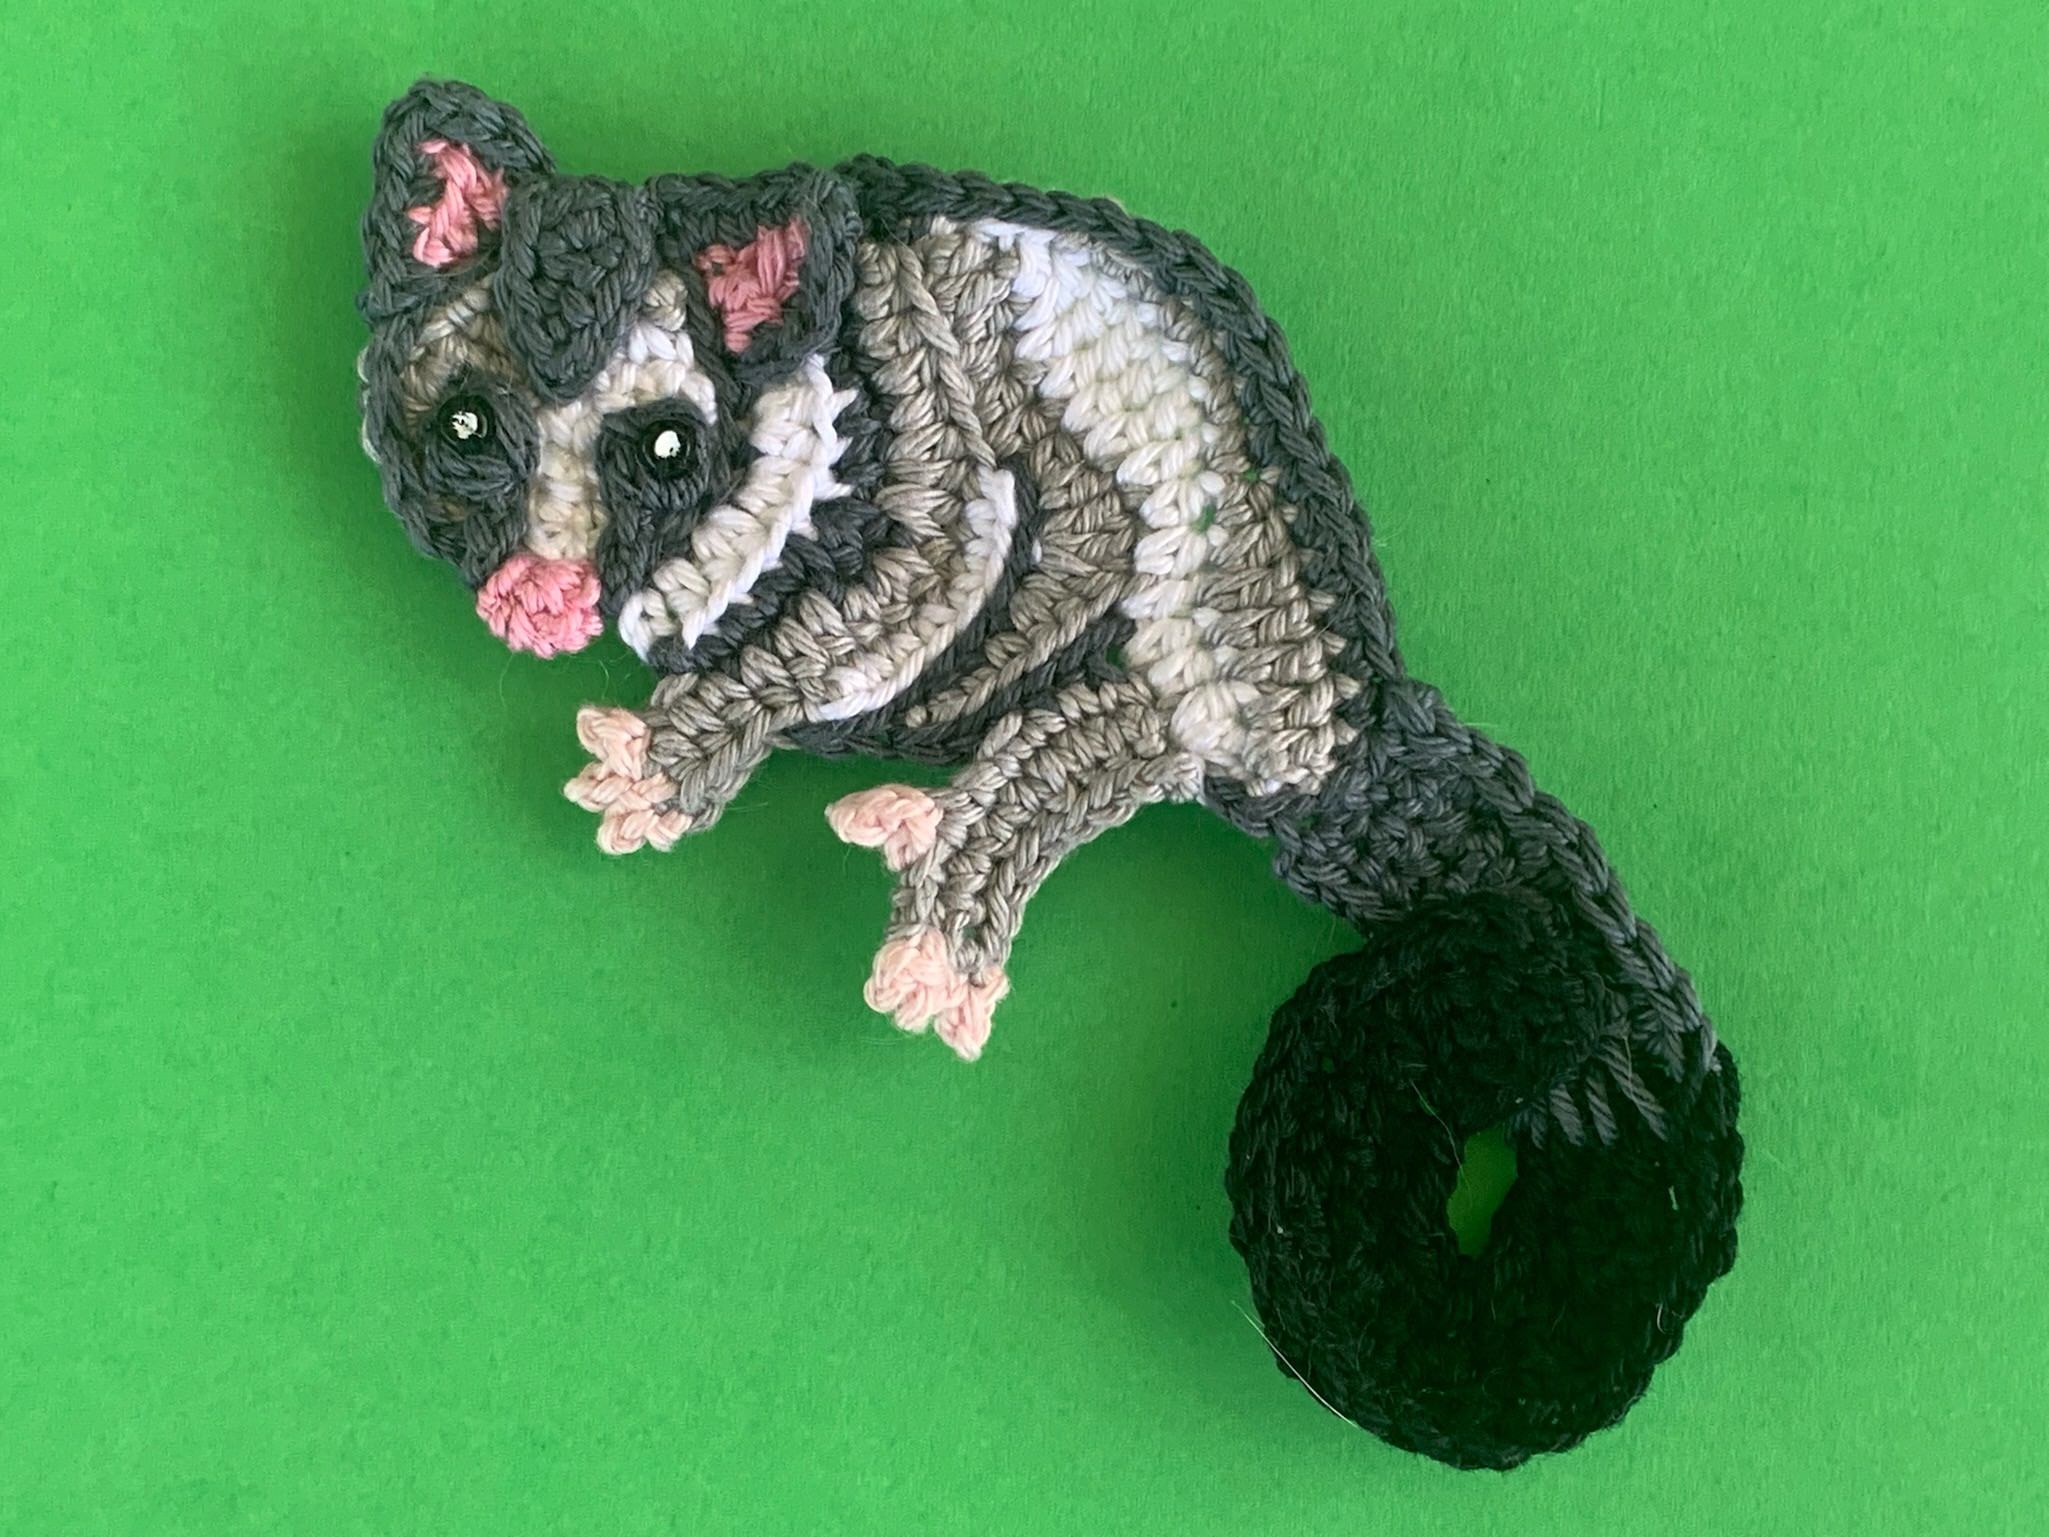 Finished crochet possum 4 ply landscape